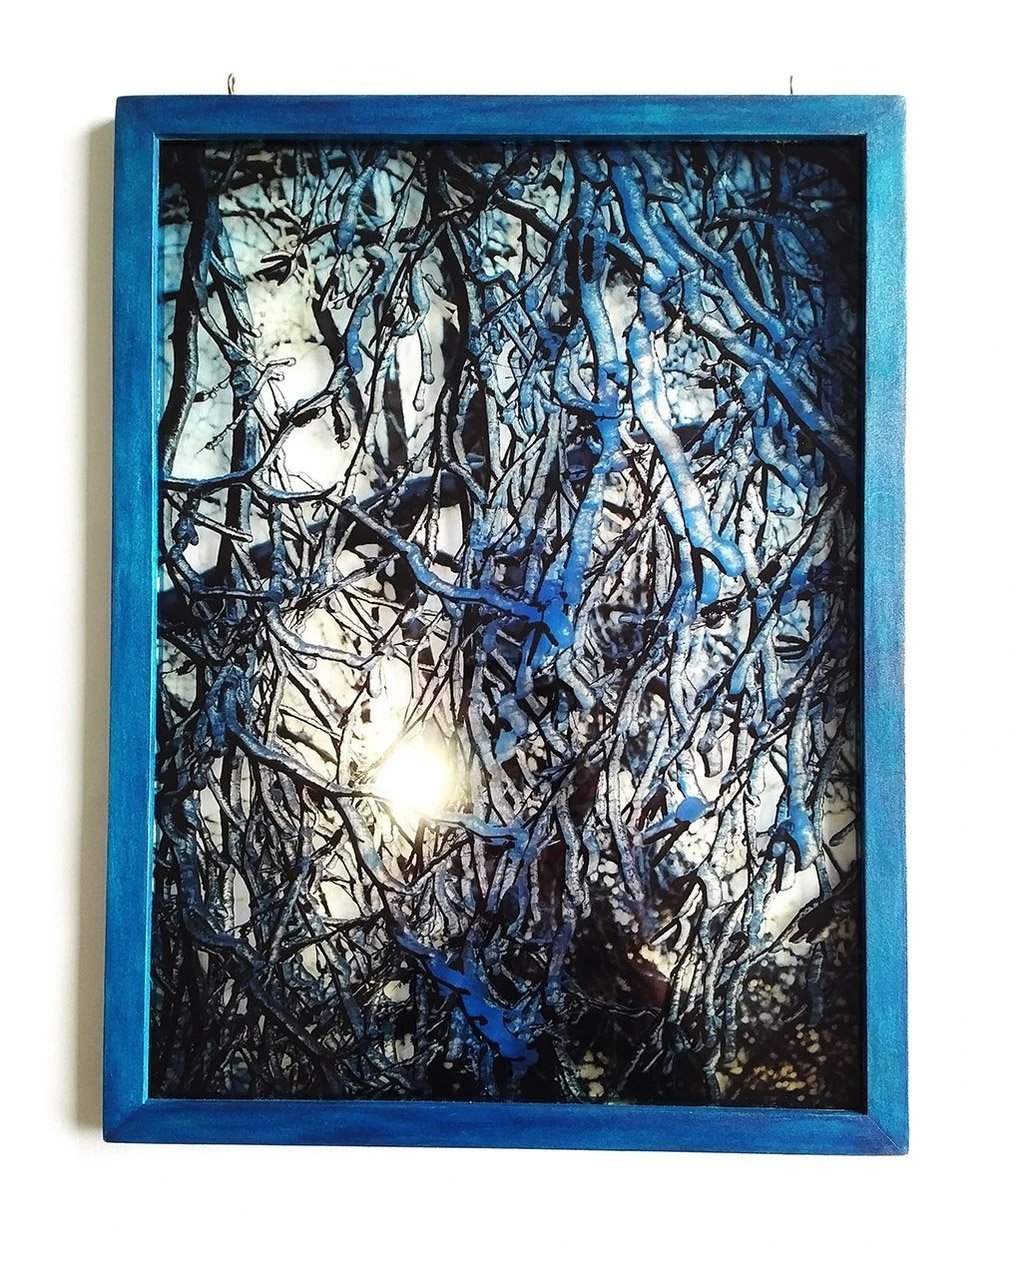 Light Shimmers Through the Ice in Rufuss Photographic Suncatcher - Artfest Ontario